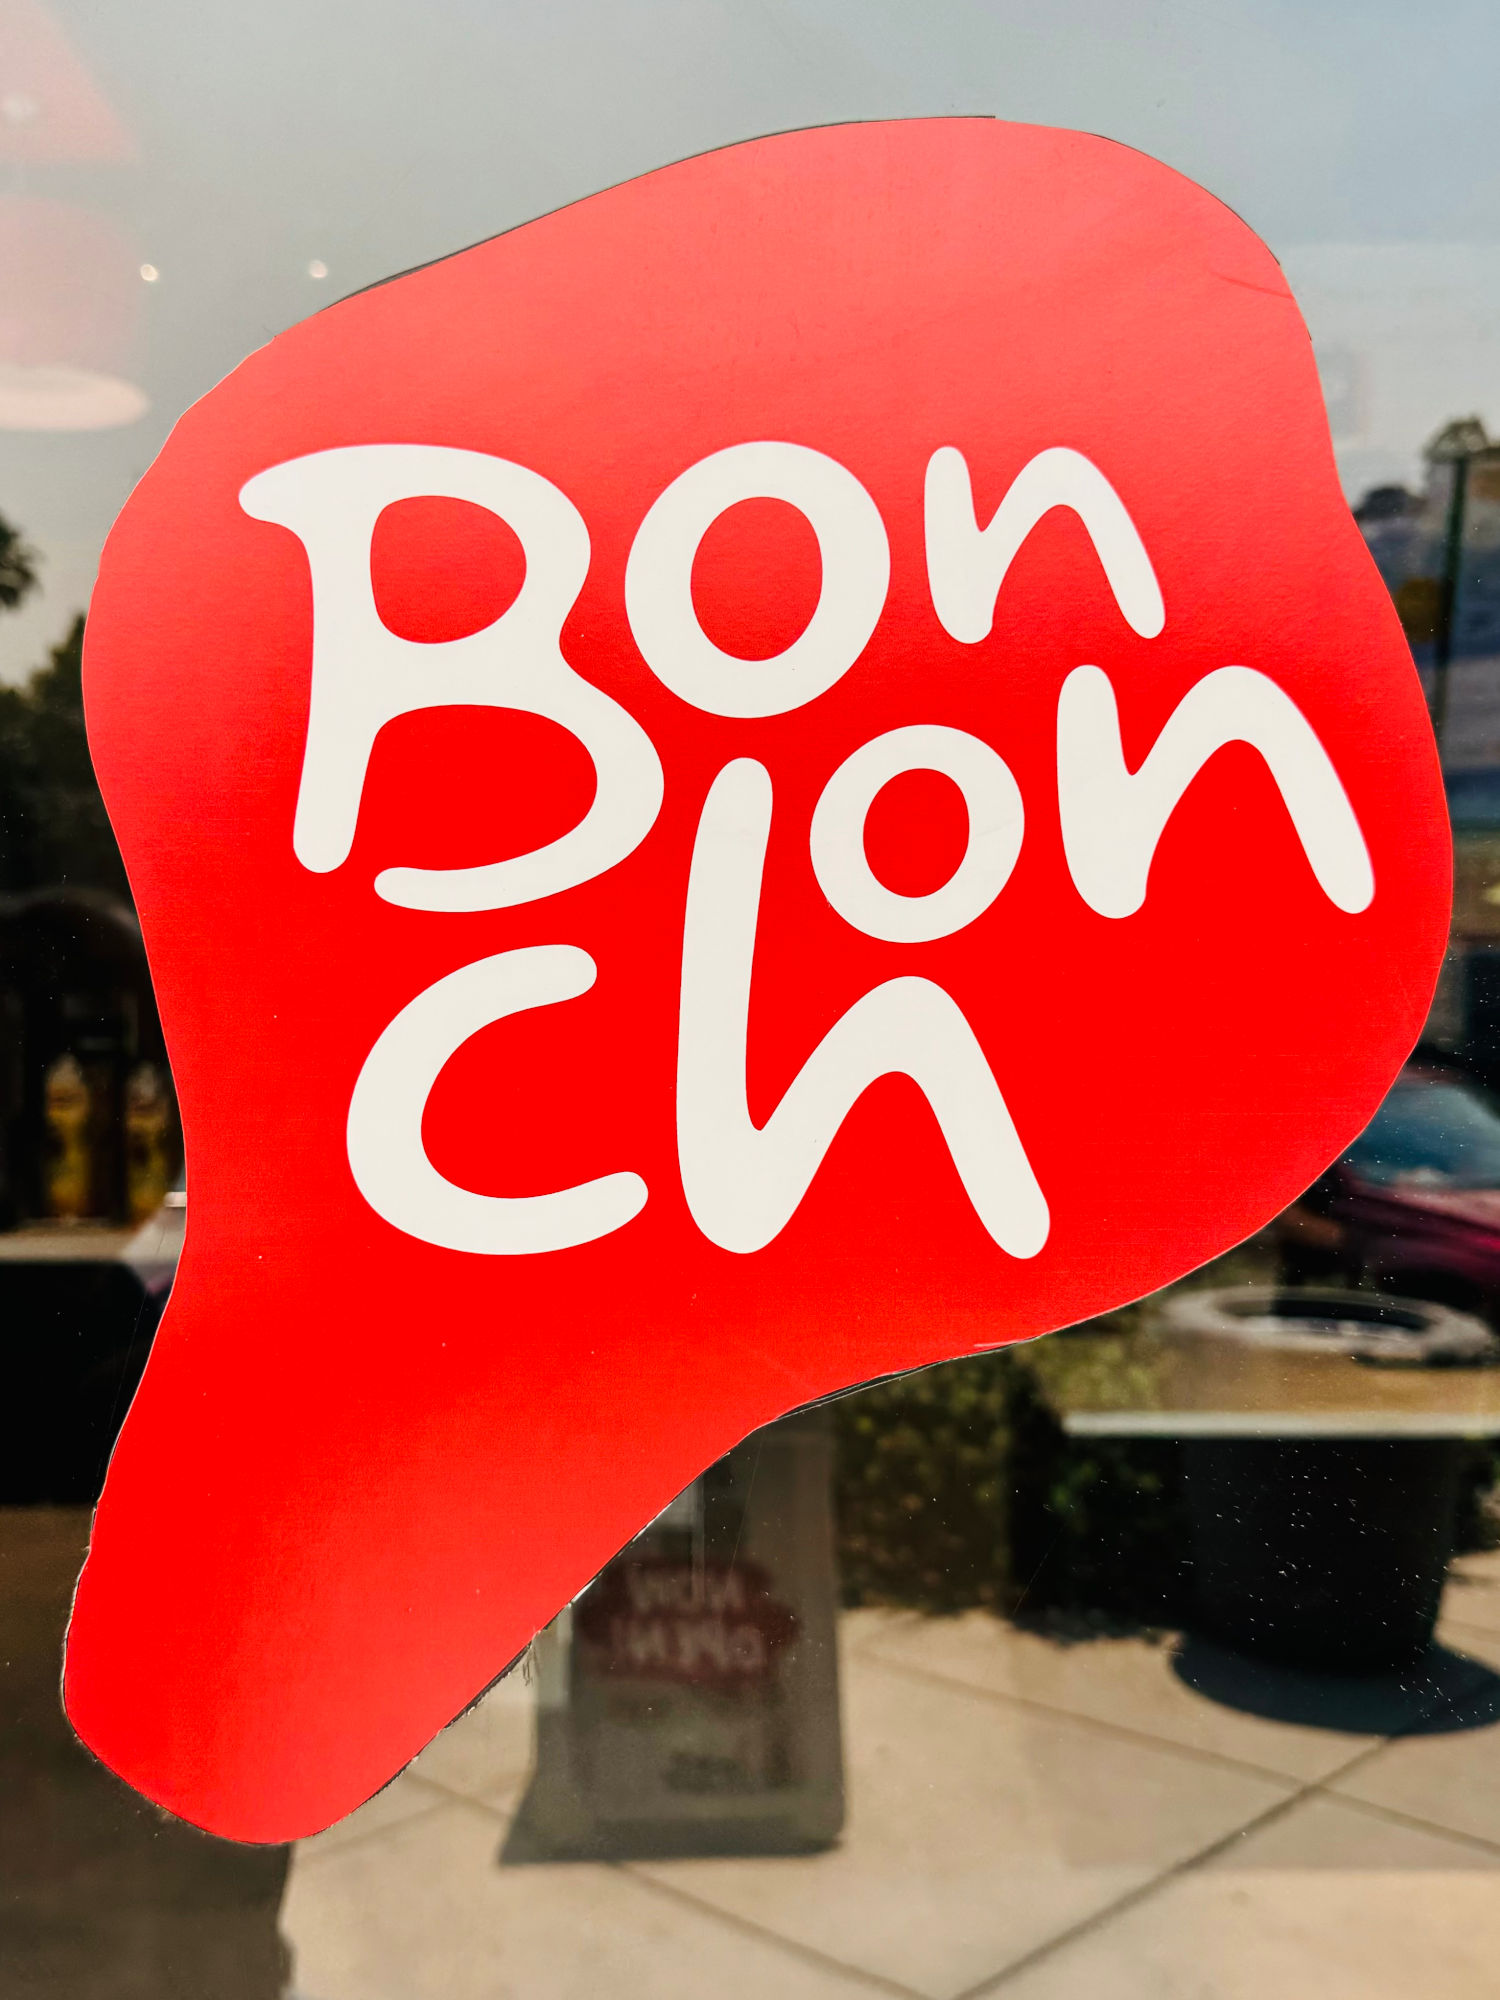 Bonchon Chicken Logo